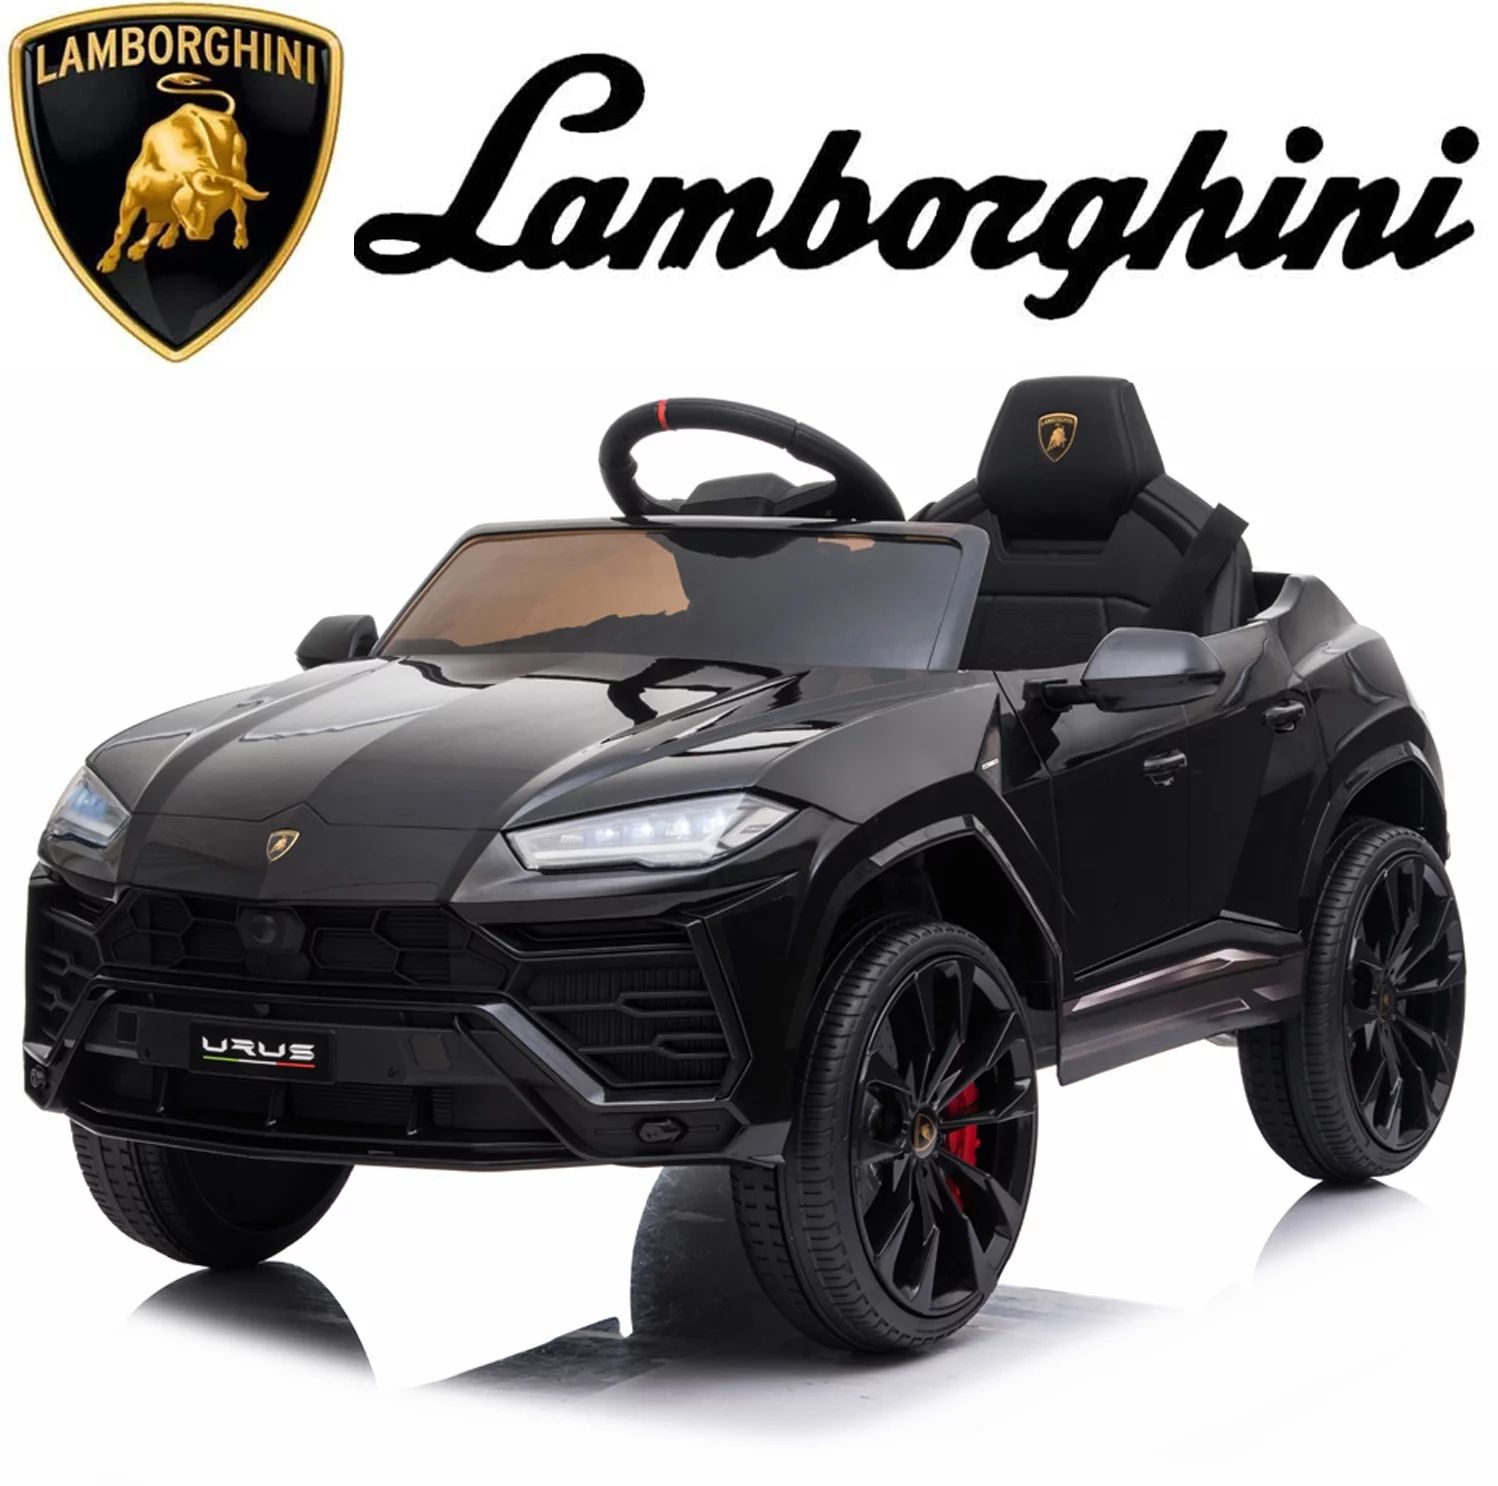 Lamborghini 12 V Powered Ride on Cars with Remote Control, 3 Speeds, LED Lights, MP3 Player, Batt... | Walmart (US)